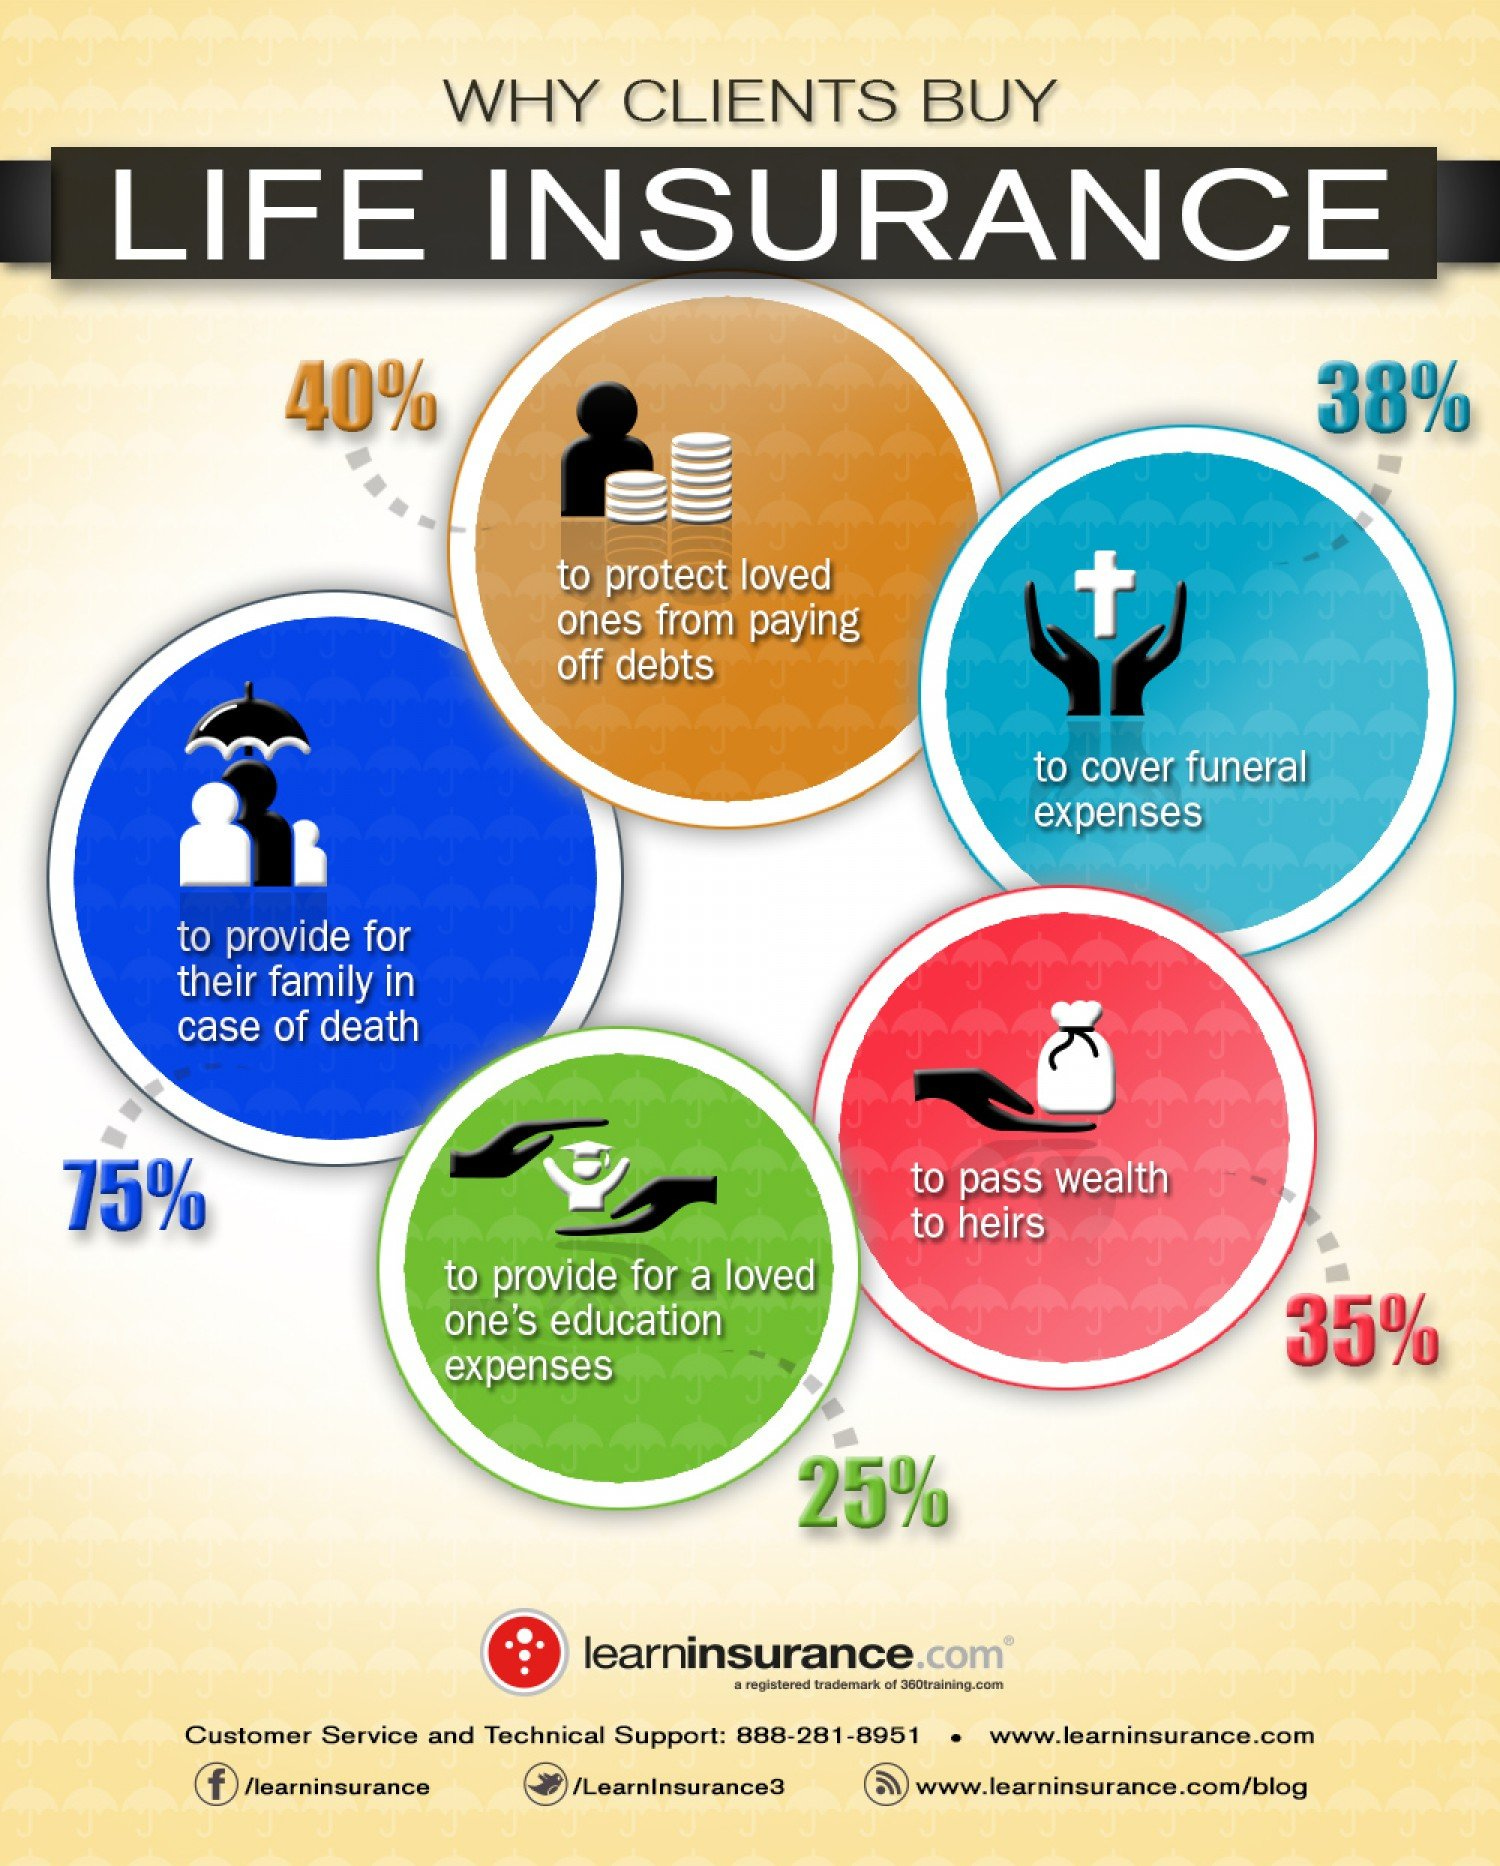 presentation life insurance